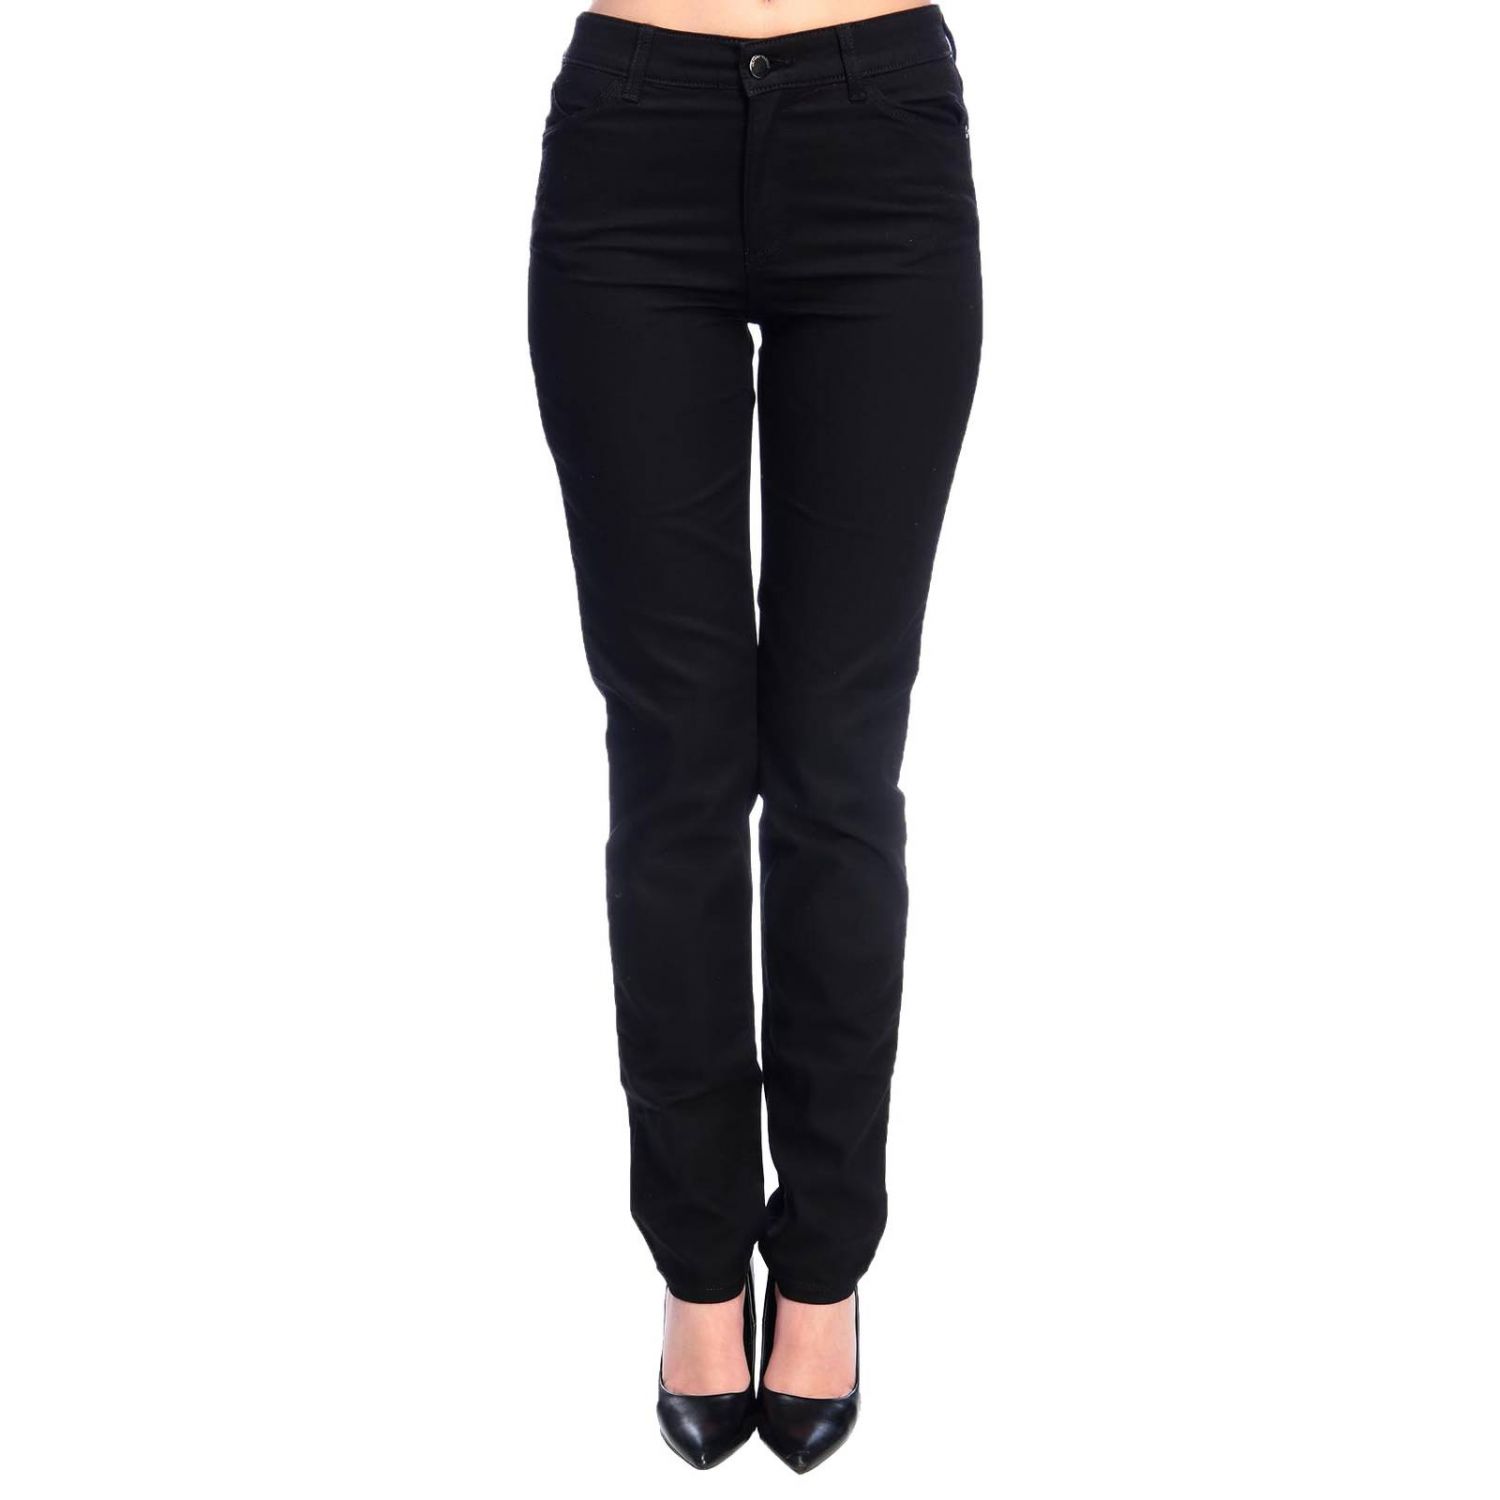 Emporio Armani Outlet: pants for woman - Black | Emporio Armani pants ...